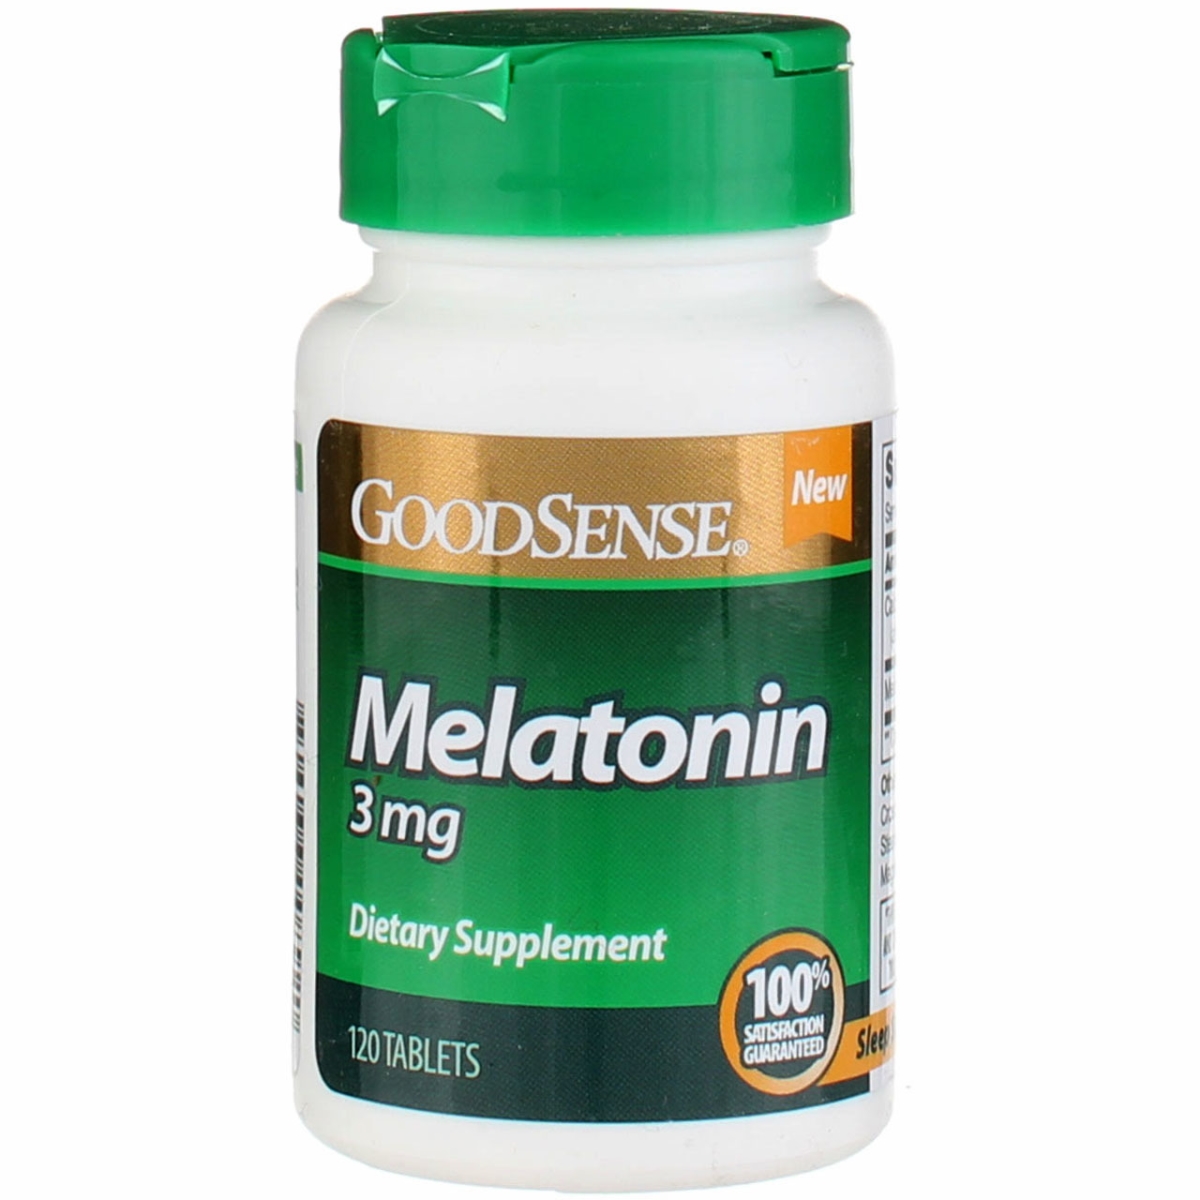 Good Sense 1902555 3 Mg Melatonin Dietary Supplement Tablets, 120 Count